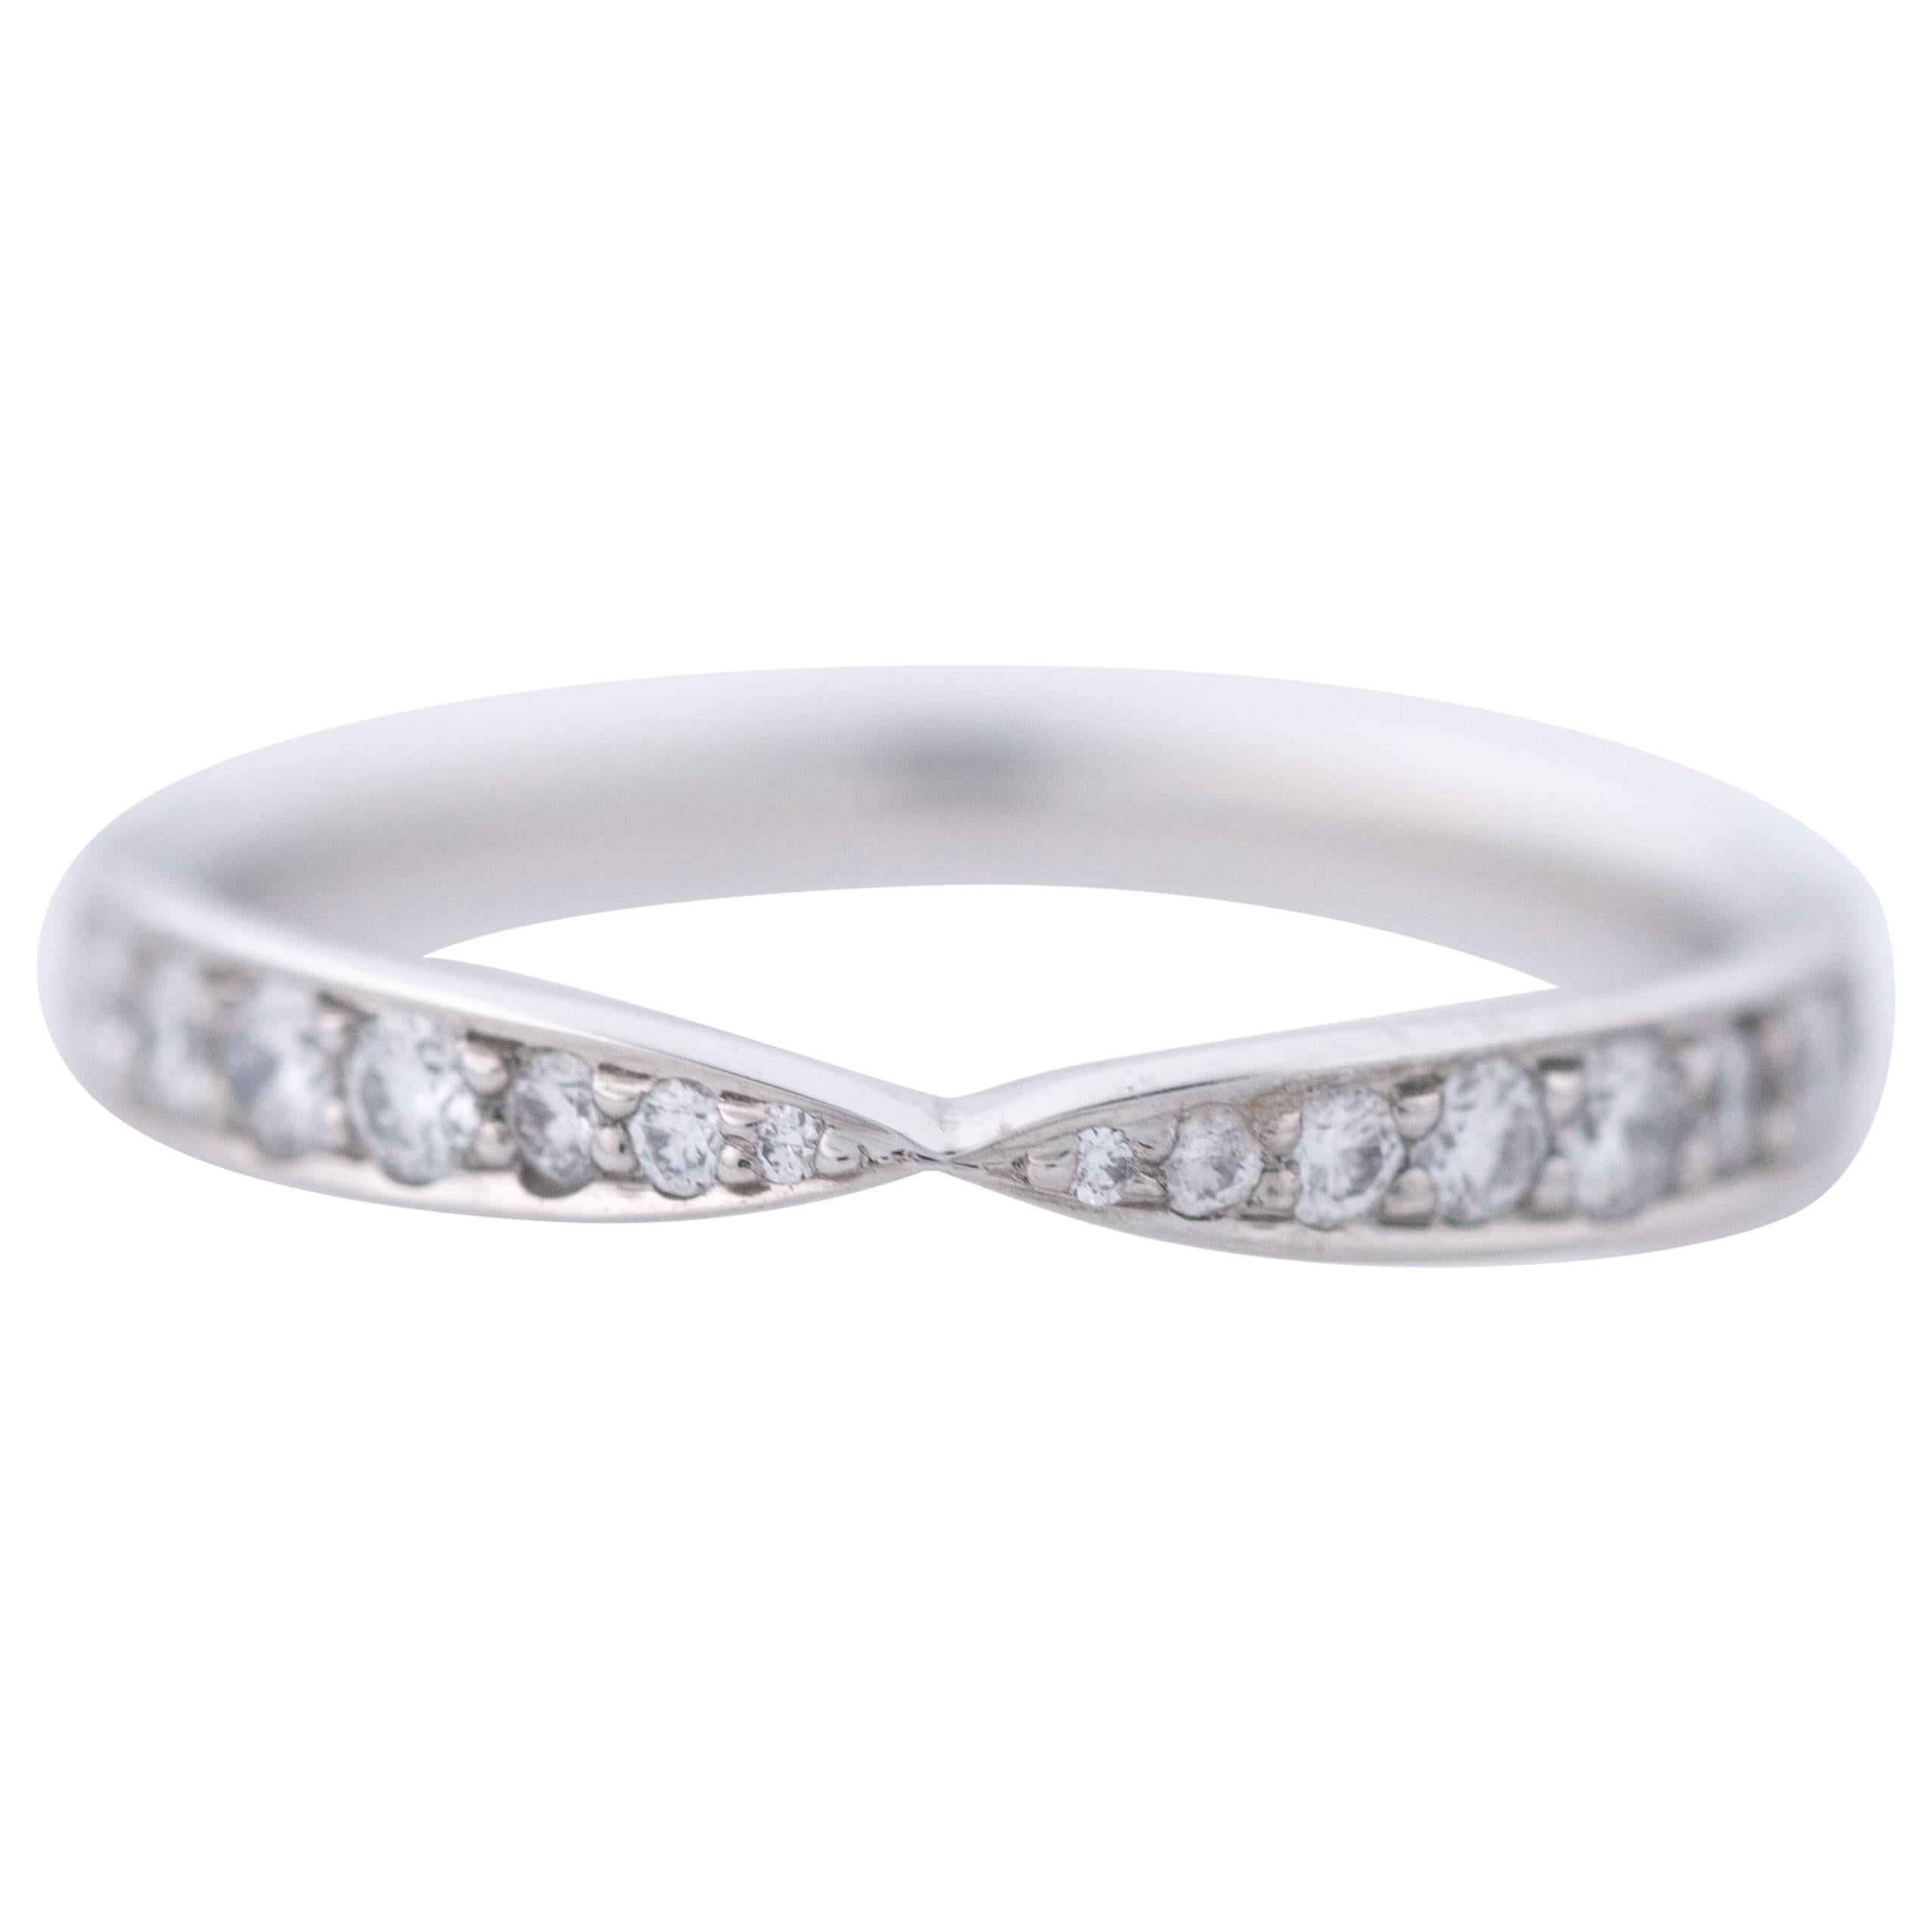 Tiffany & Co. Harmony Bead-Set Diamond Ring Platinum Wedding Band